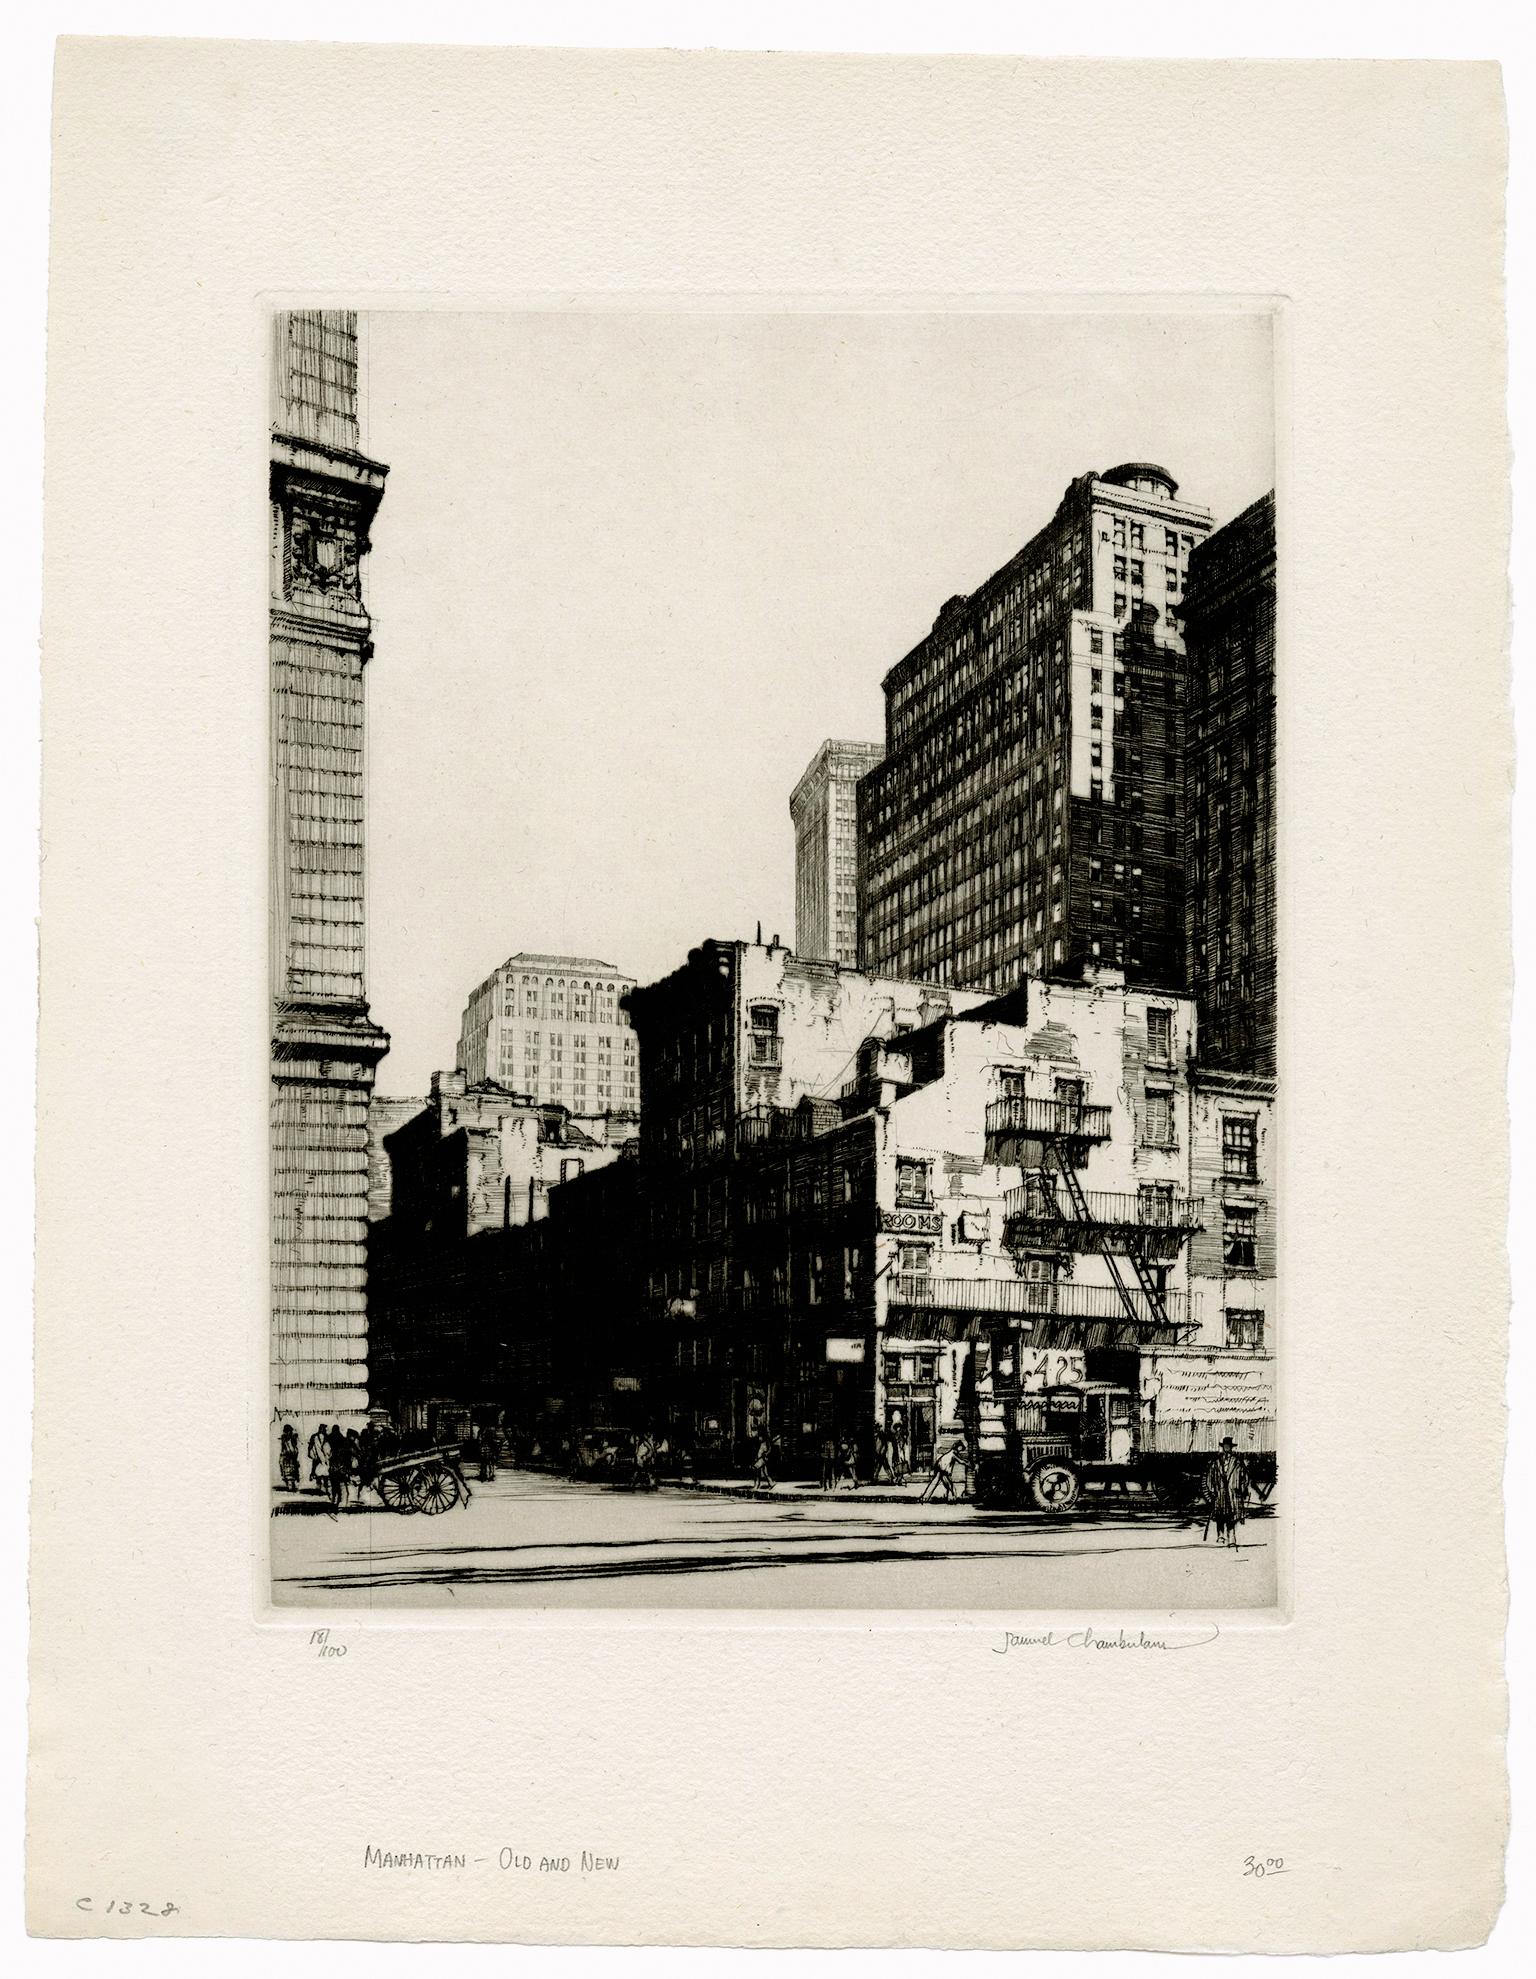 Manhattan Old and New' -1920s Réalisme, paysage urbain - Print de Samuel Chamberlain